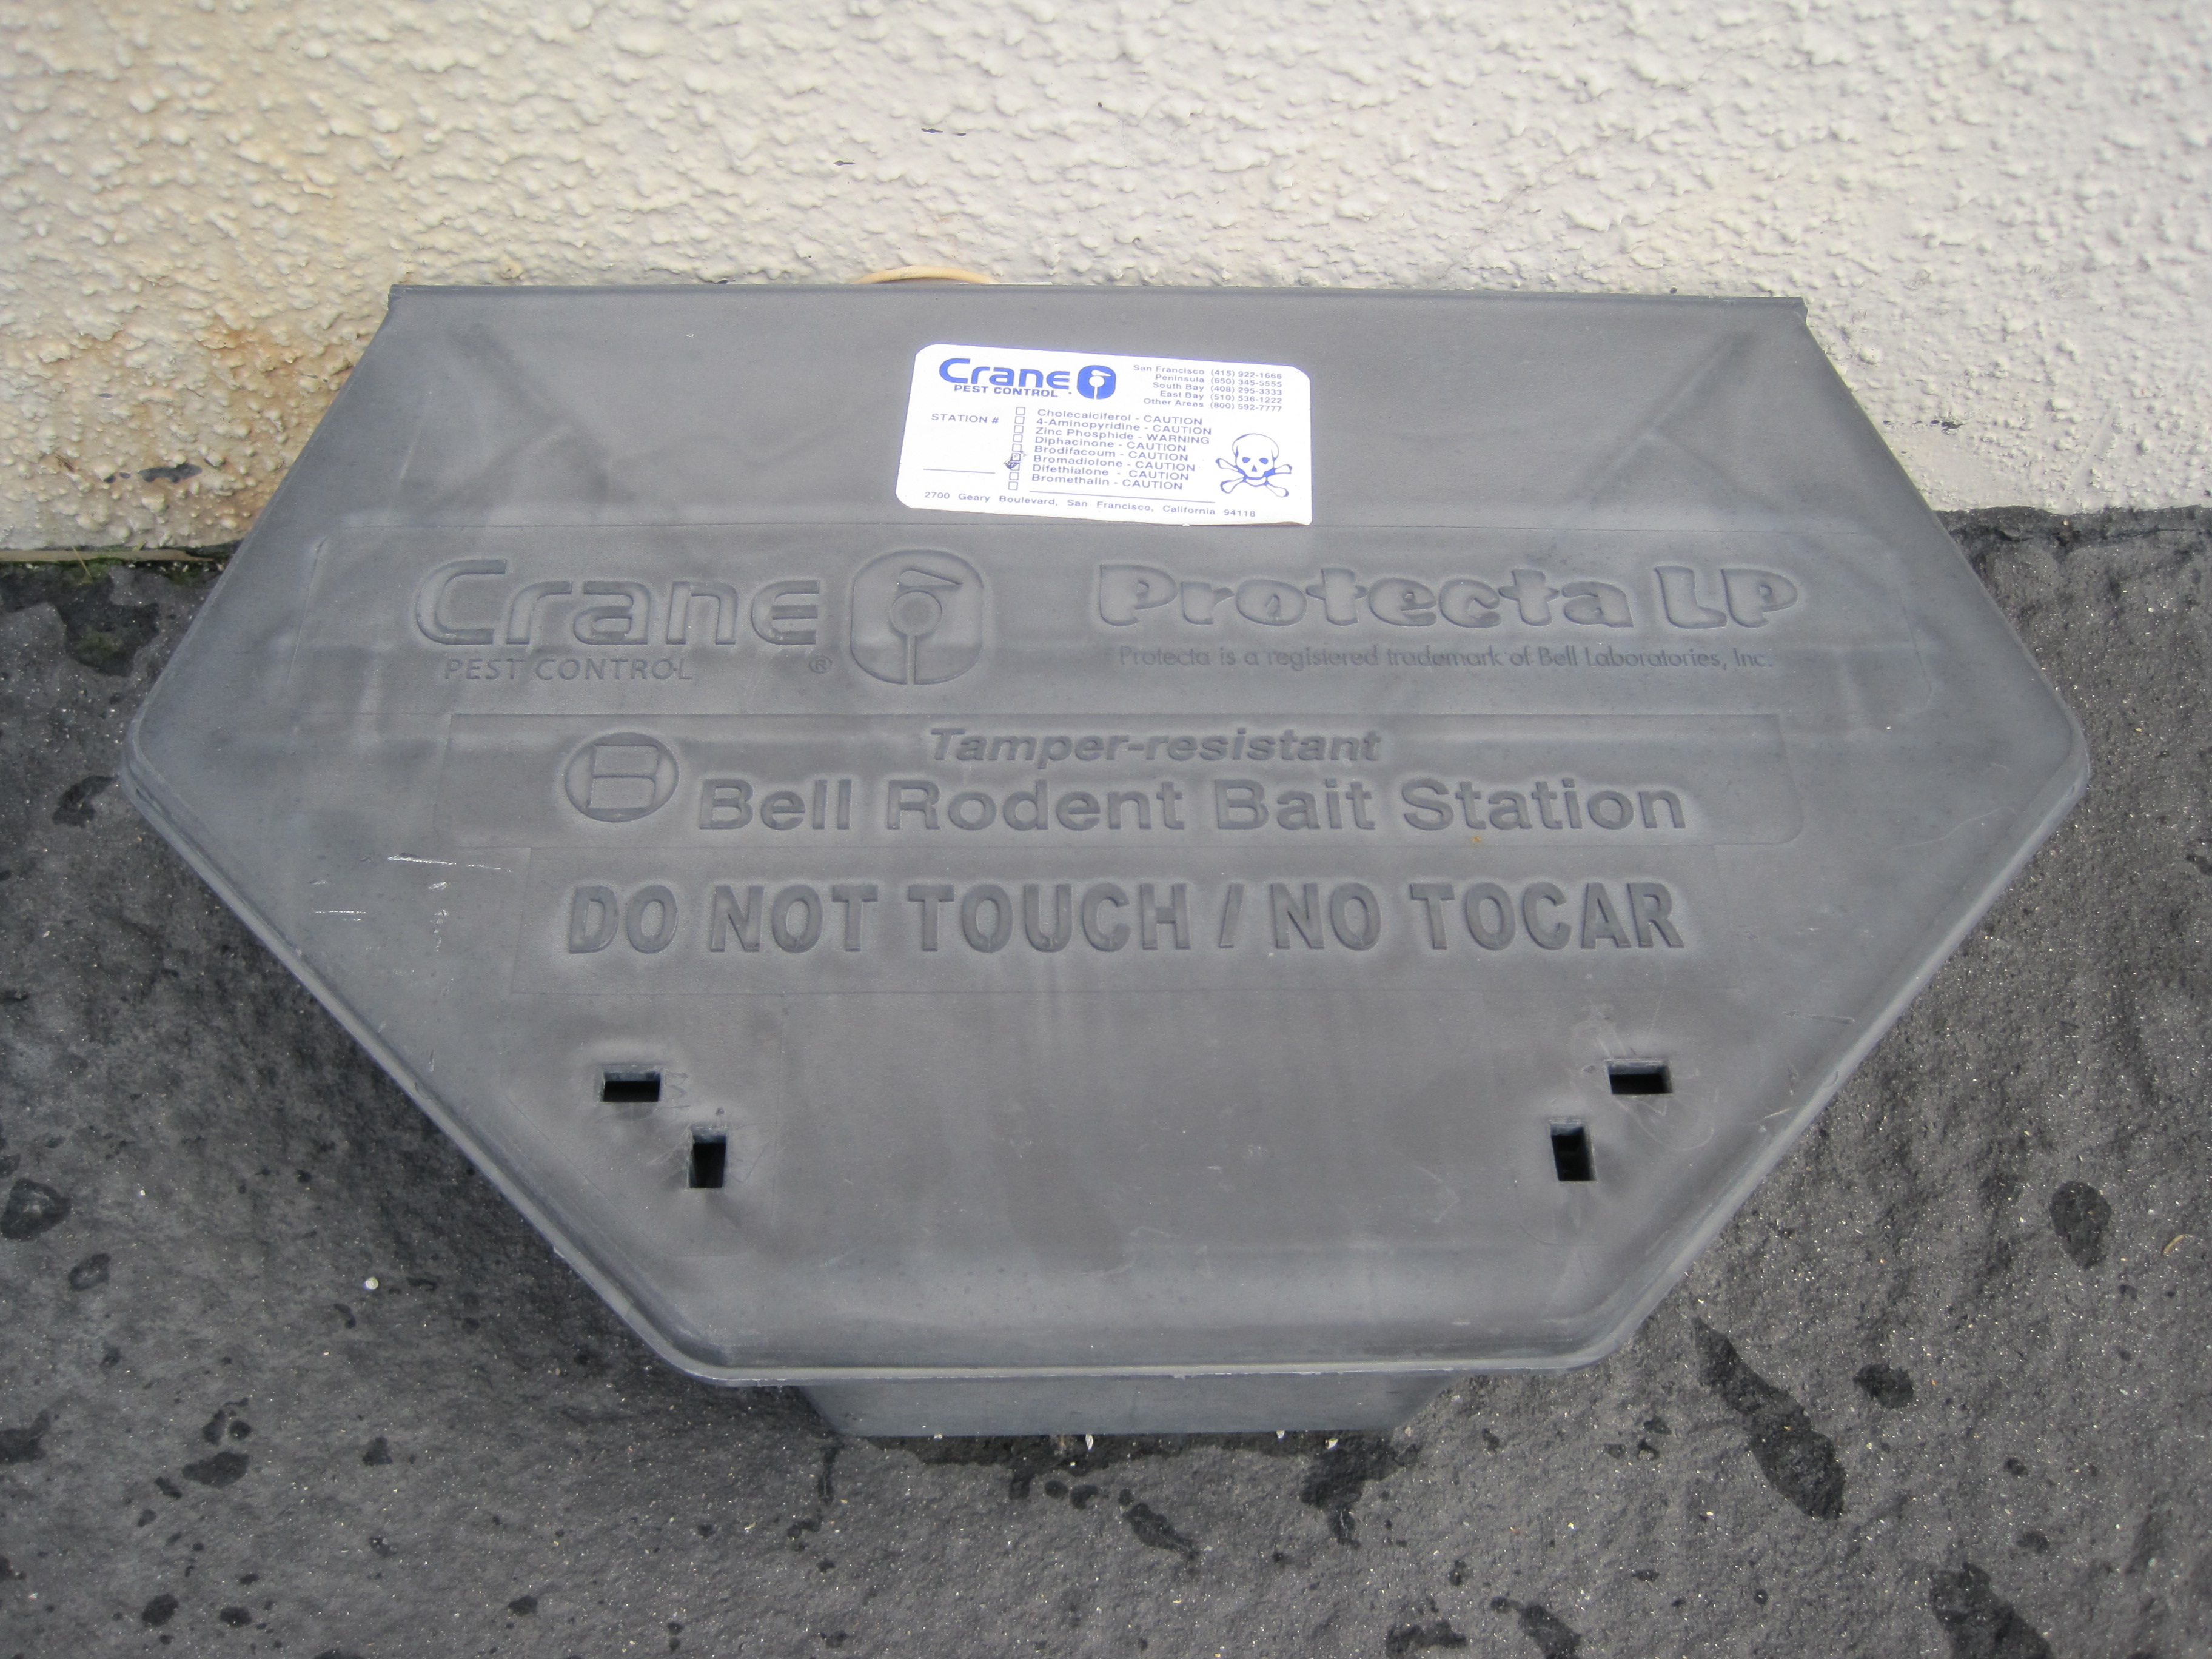 File:Bell Rodent Bait Station.JPG - Wikimedia Commons